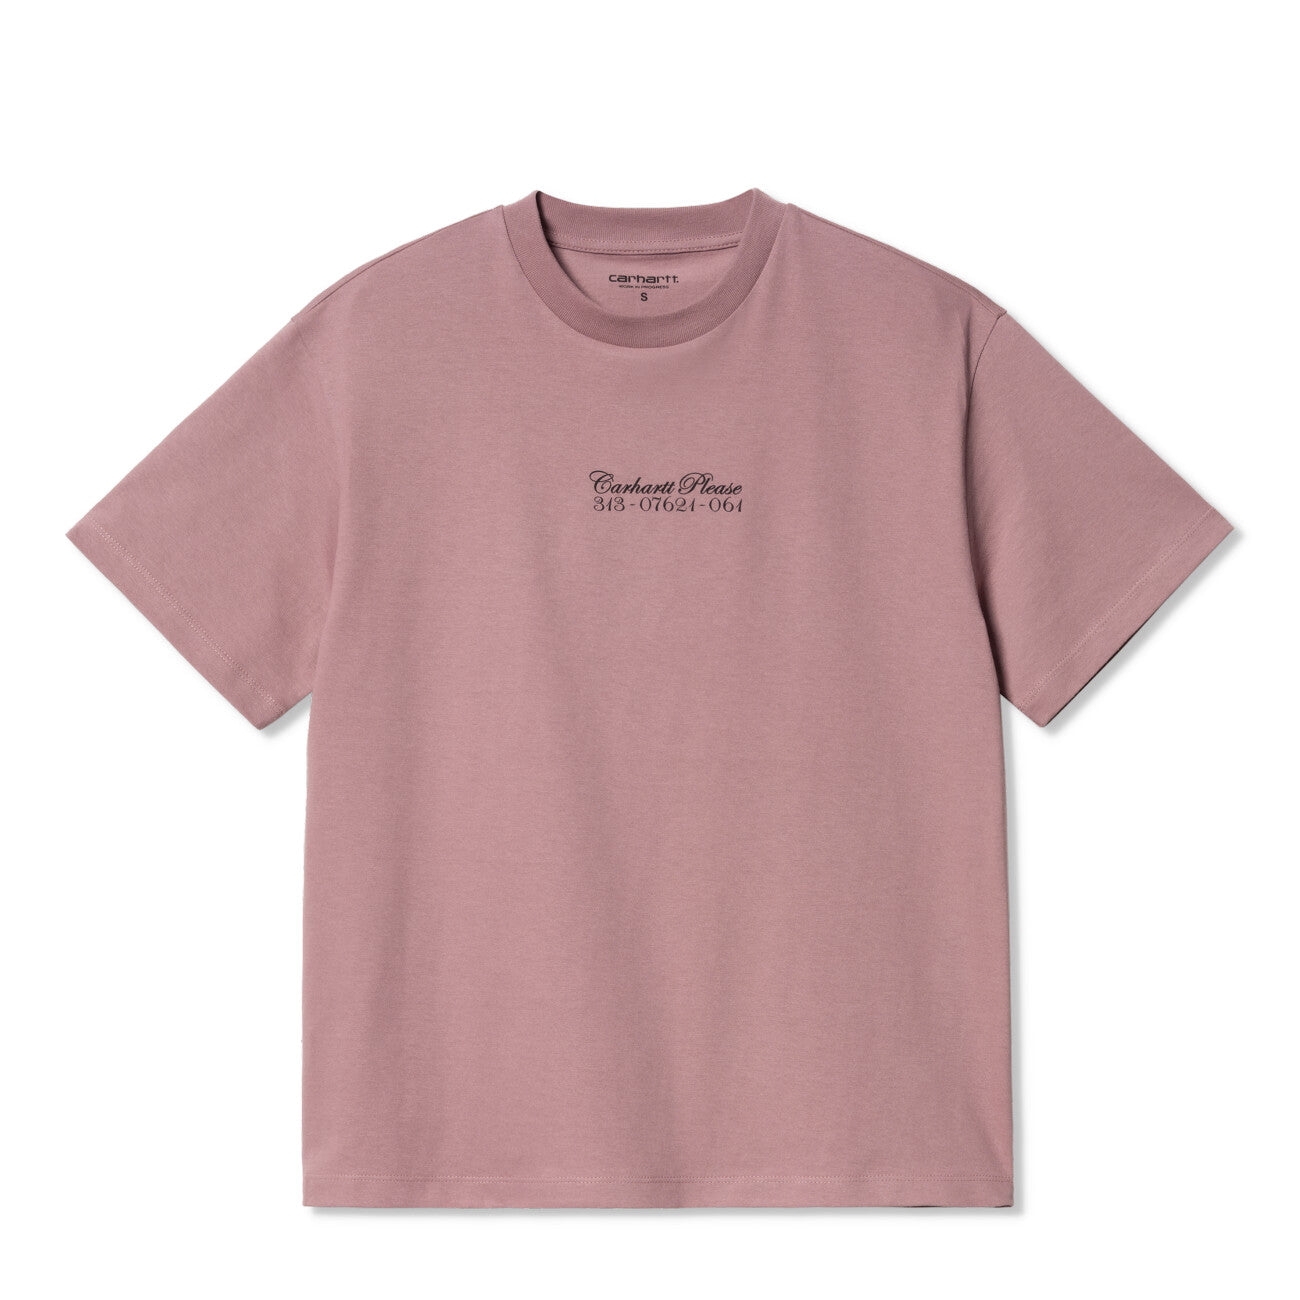 W S/S Carhartt Please T-Shirt